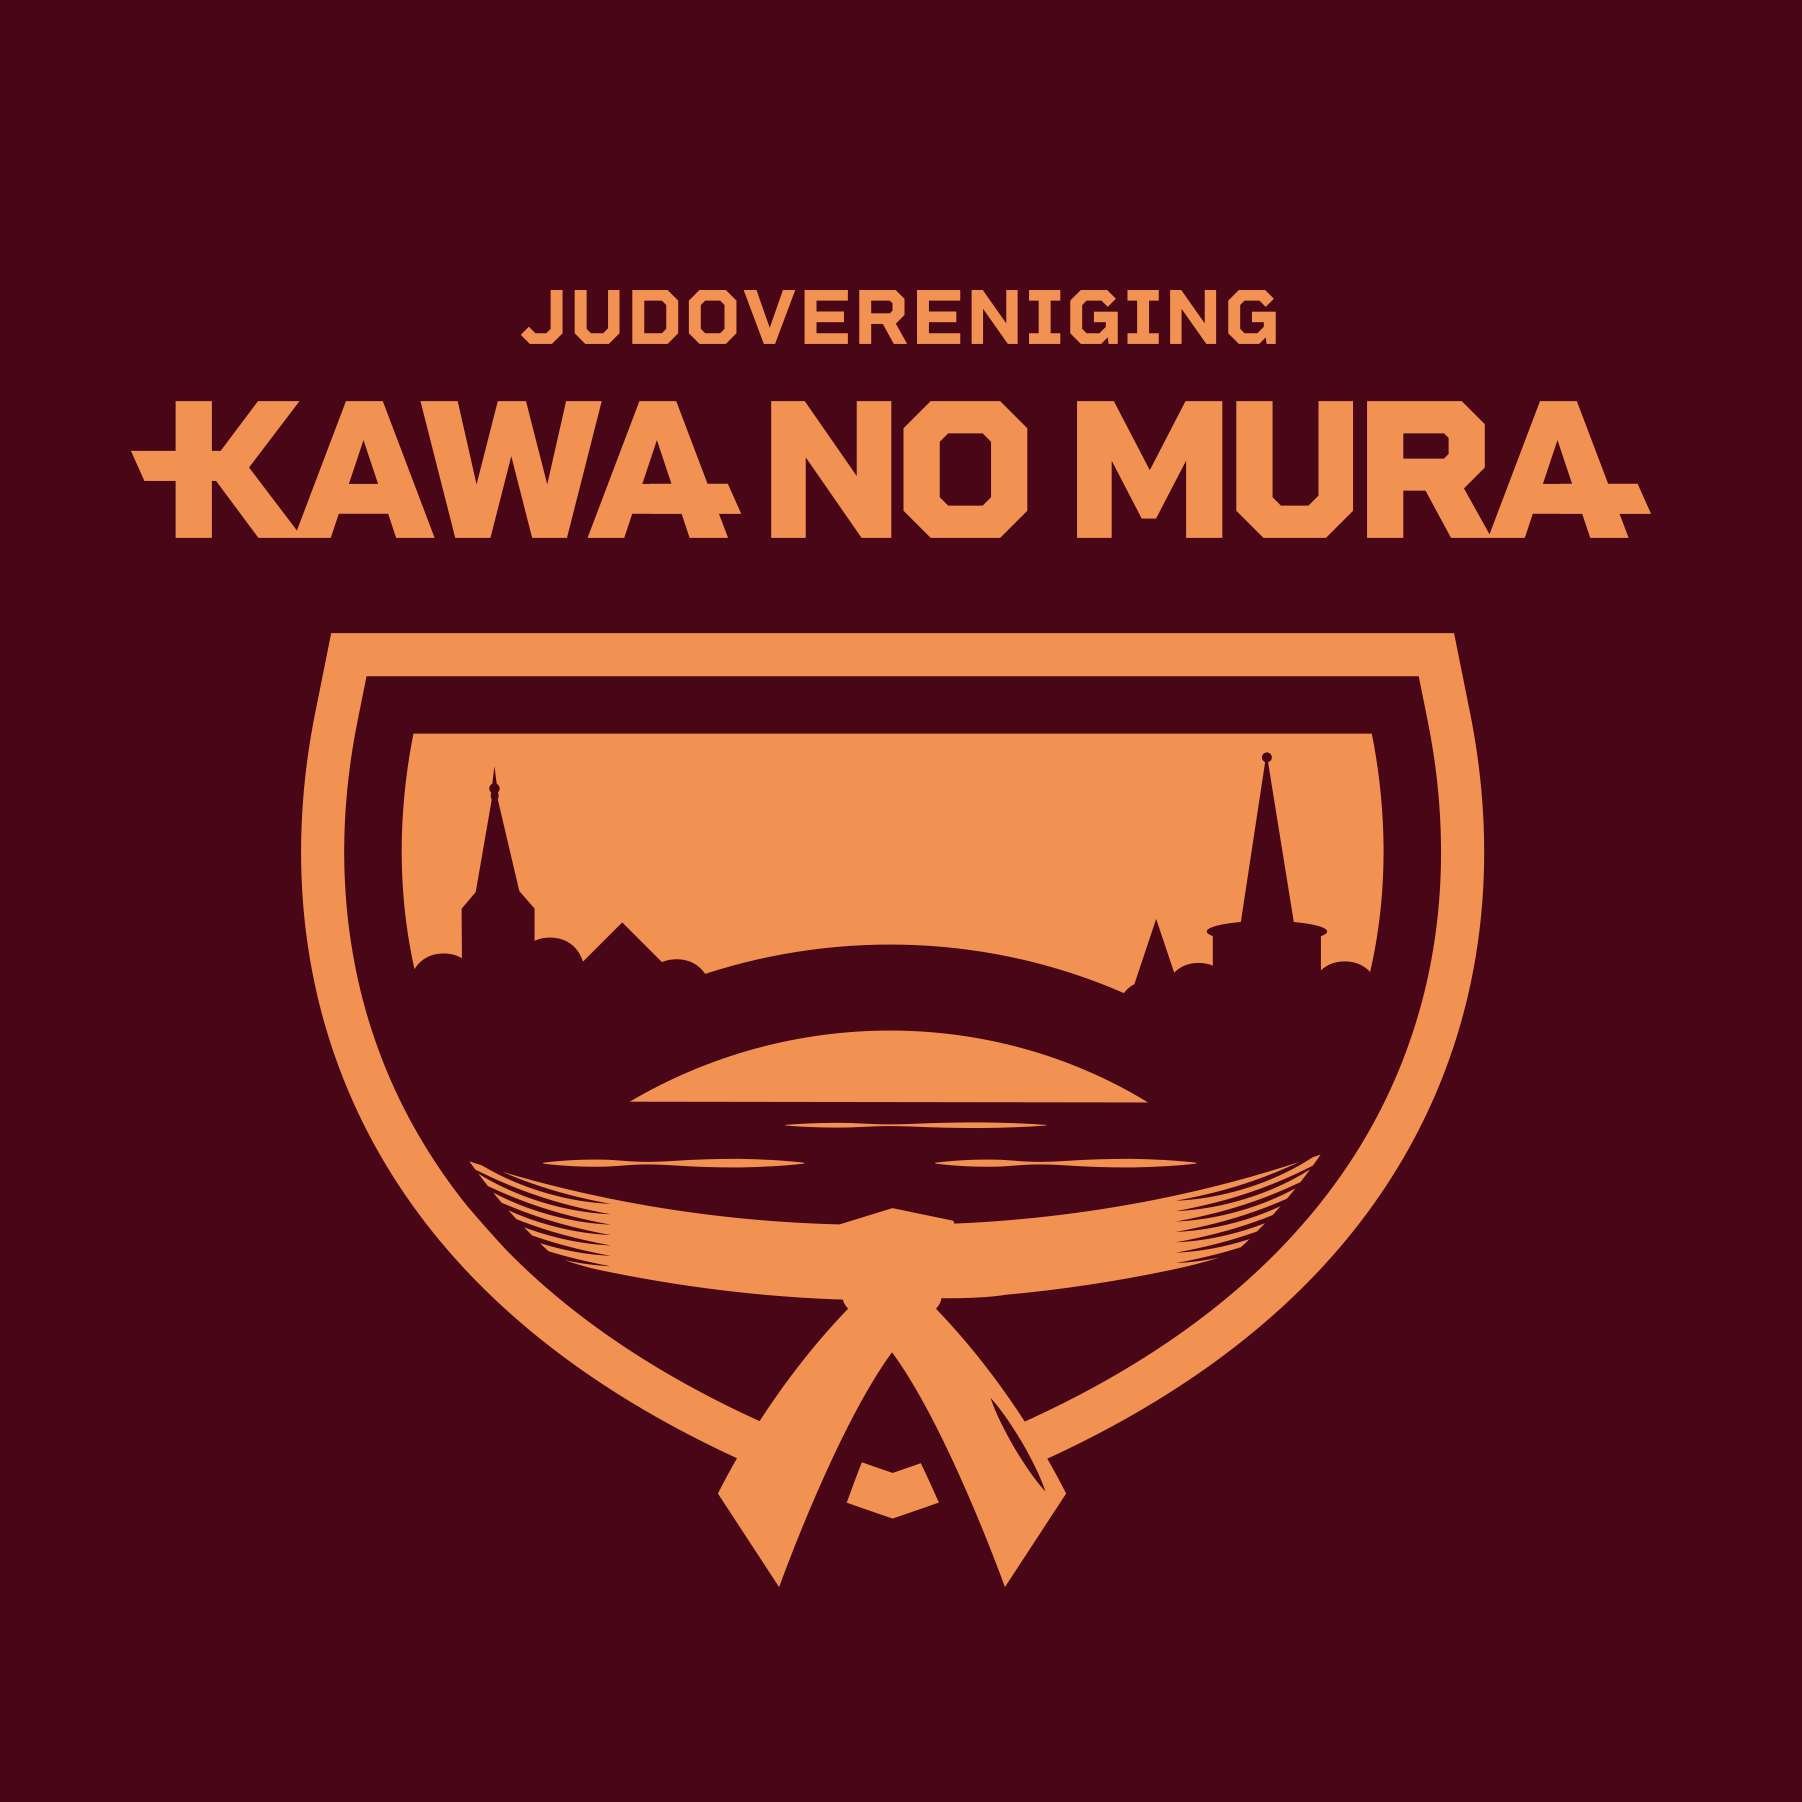 Judovereniging Kawa No Mura